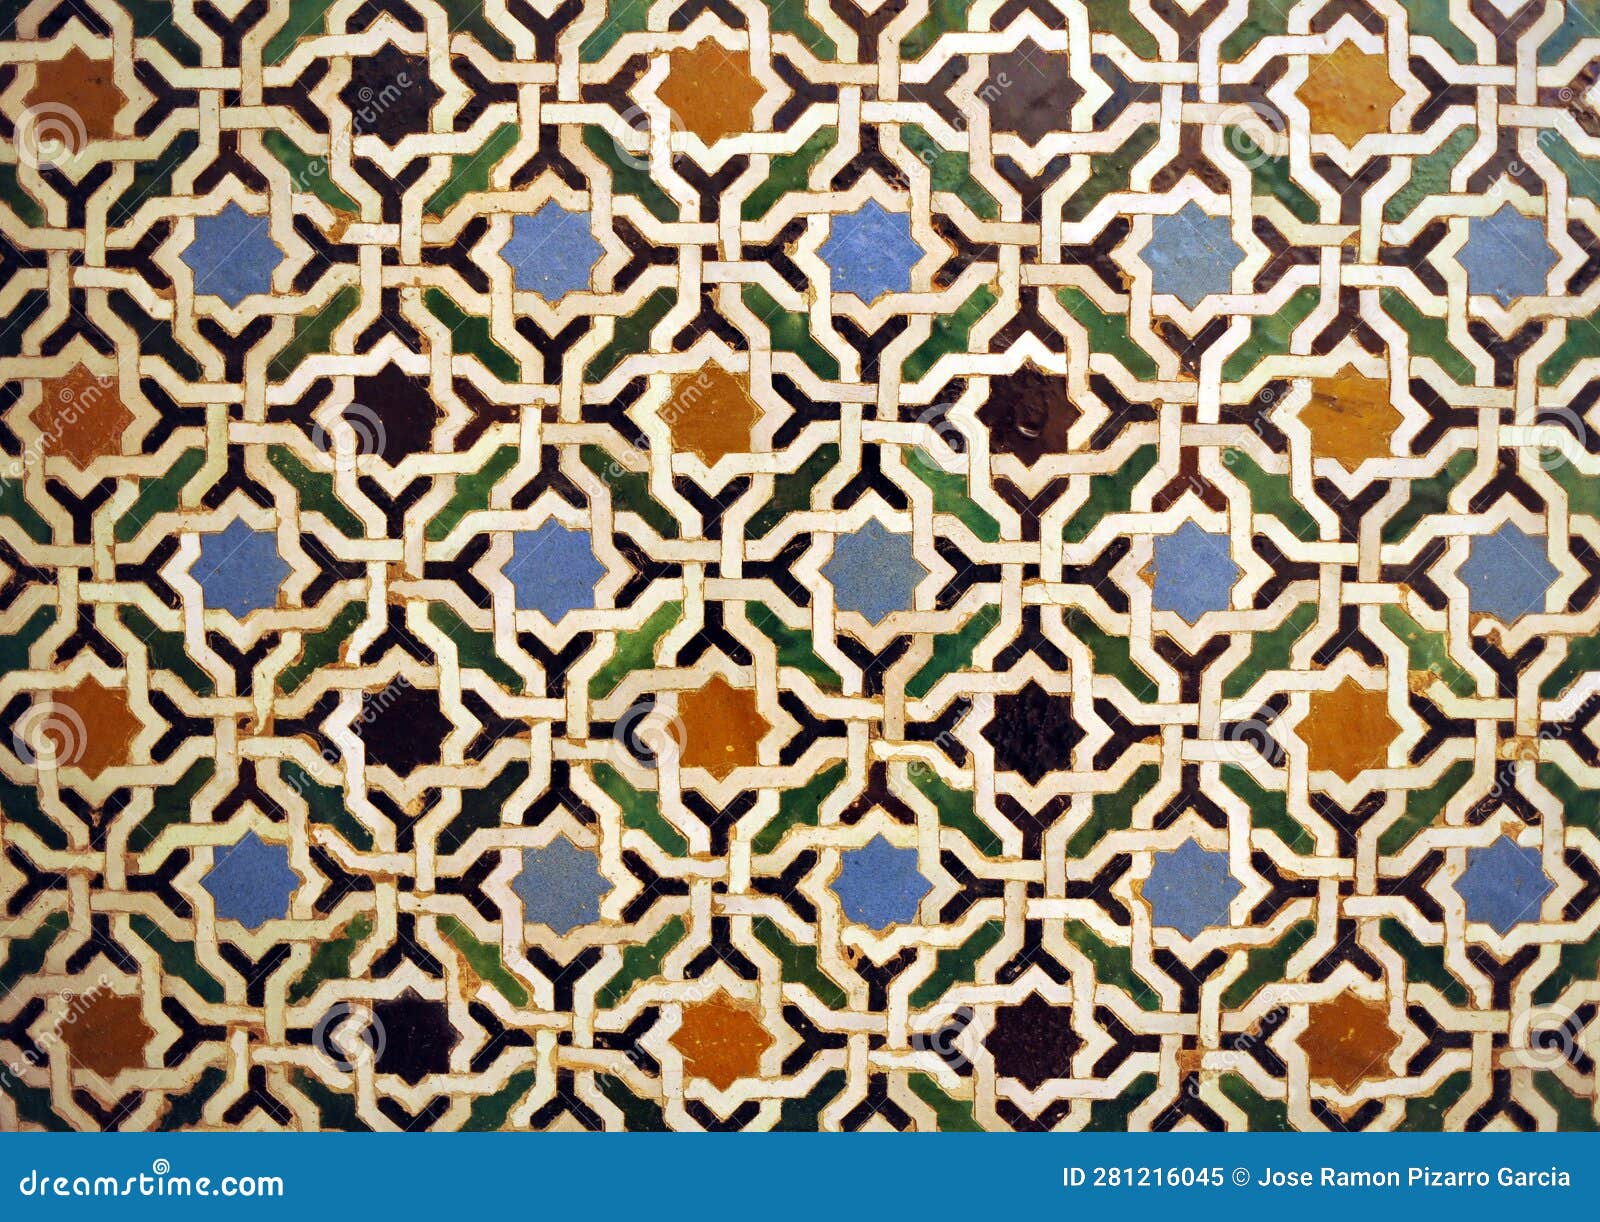 arab geometric mosaic of alhambra in granada, spain.